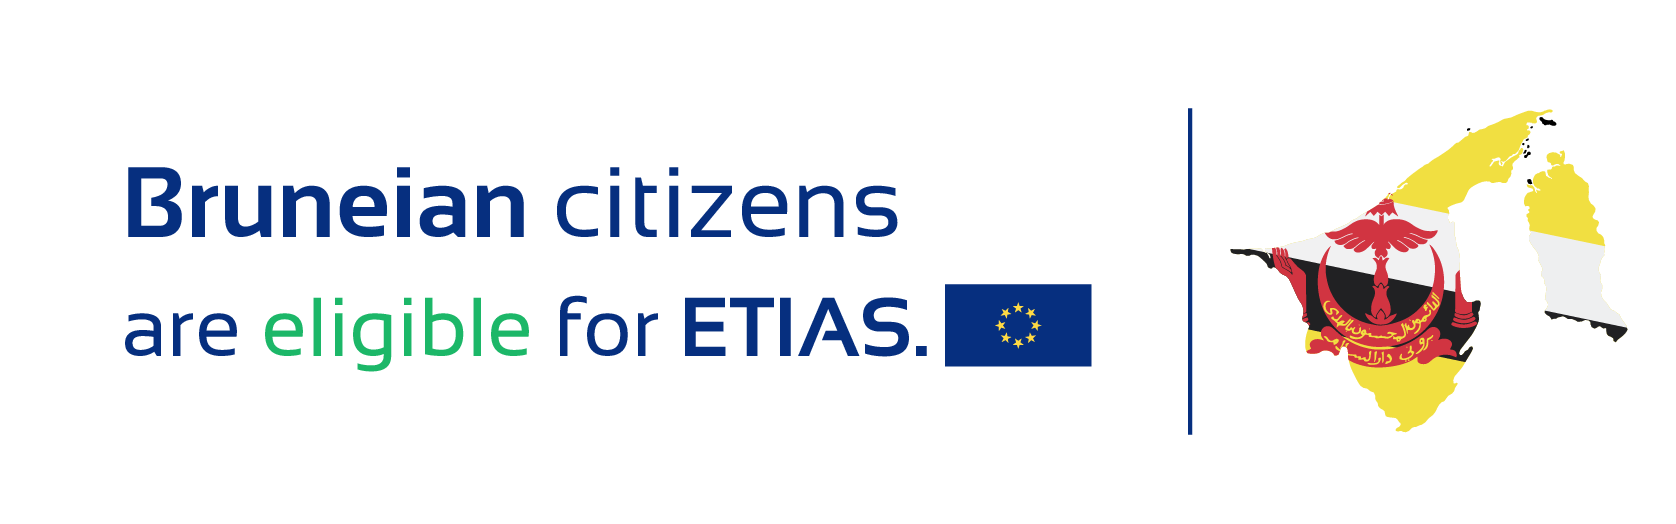 Bruneian citizens are eligible for ETIAS